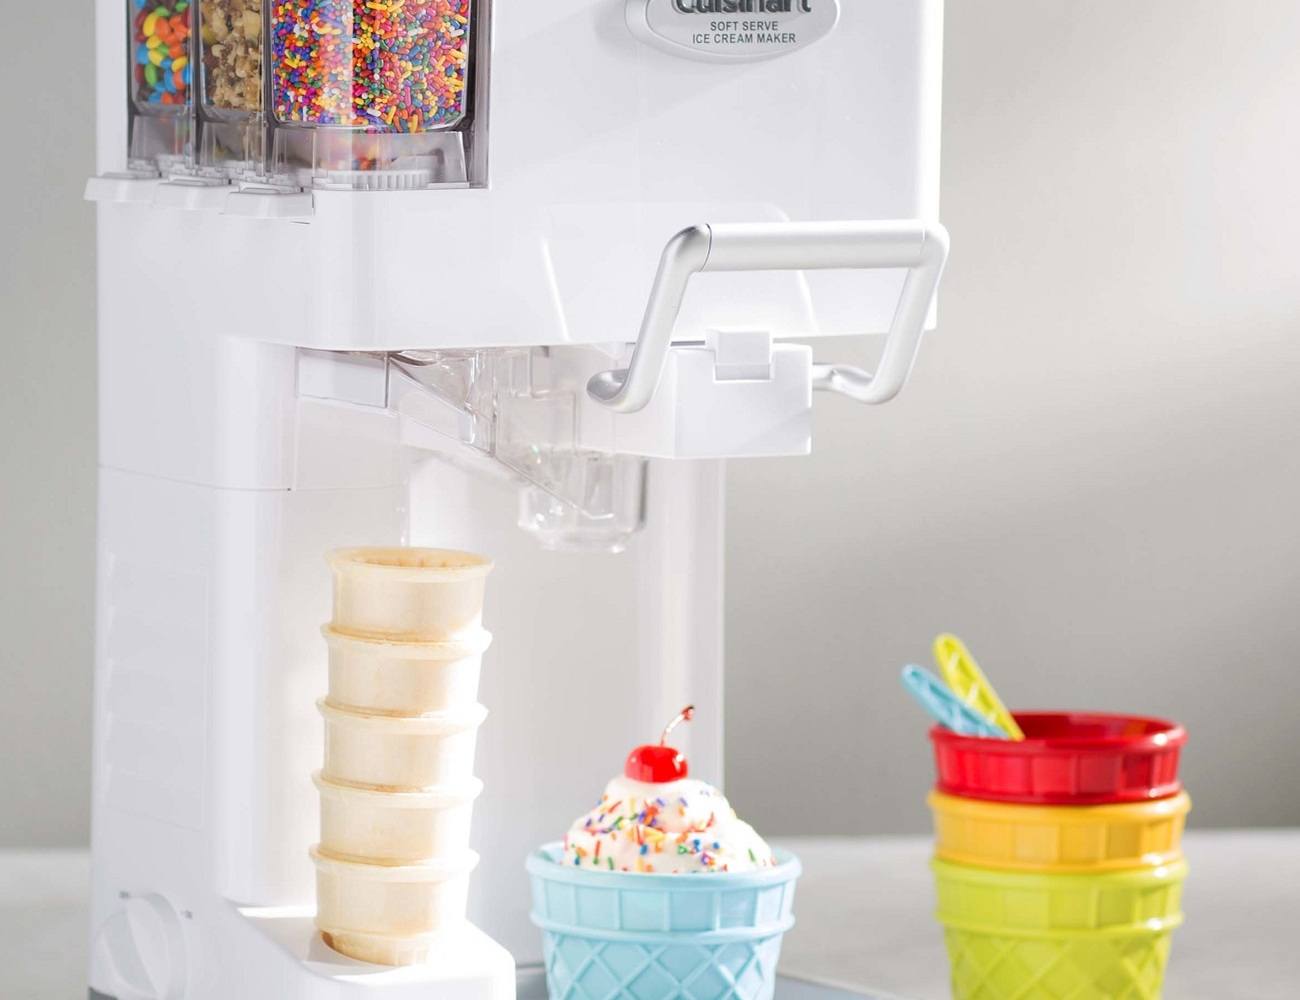 https://thegadgetflow.com/wp-content/uploads/2012/09/Cuisinart-Mix-It-In-Soft-Serve-Ice-Cream-Maker-2.jpg